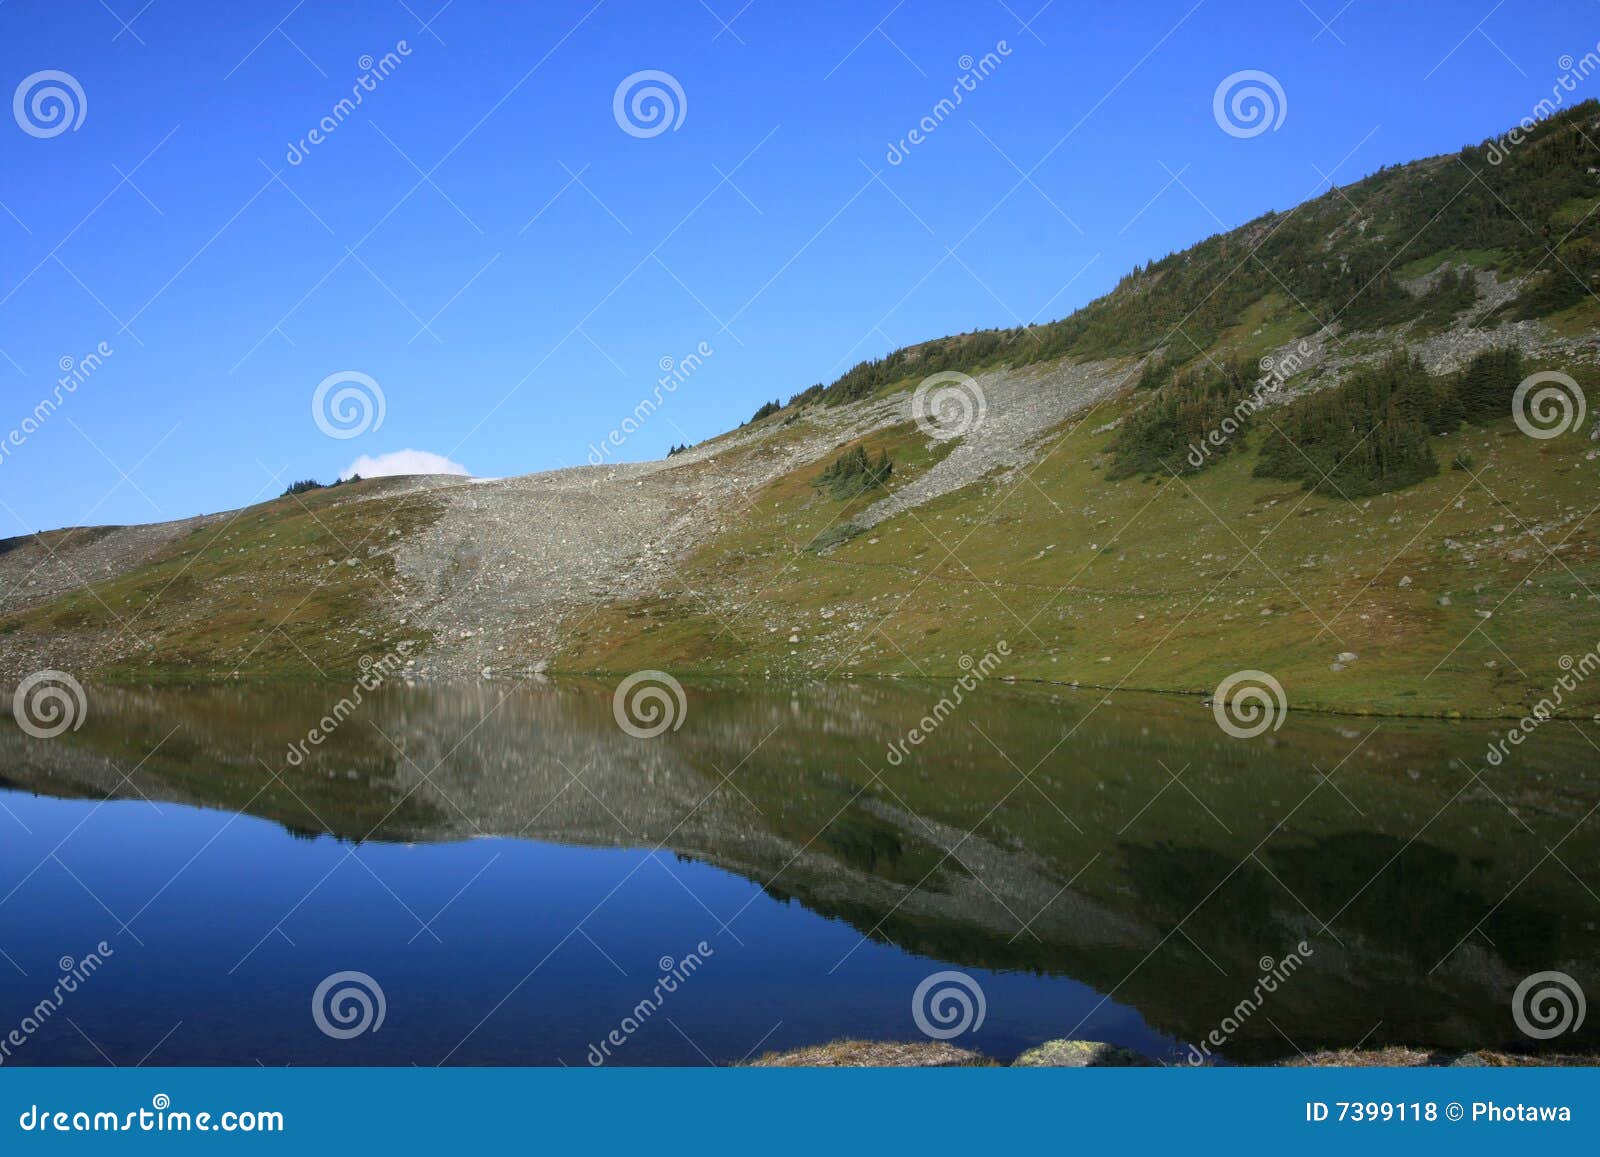 russet lake reflection